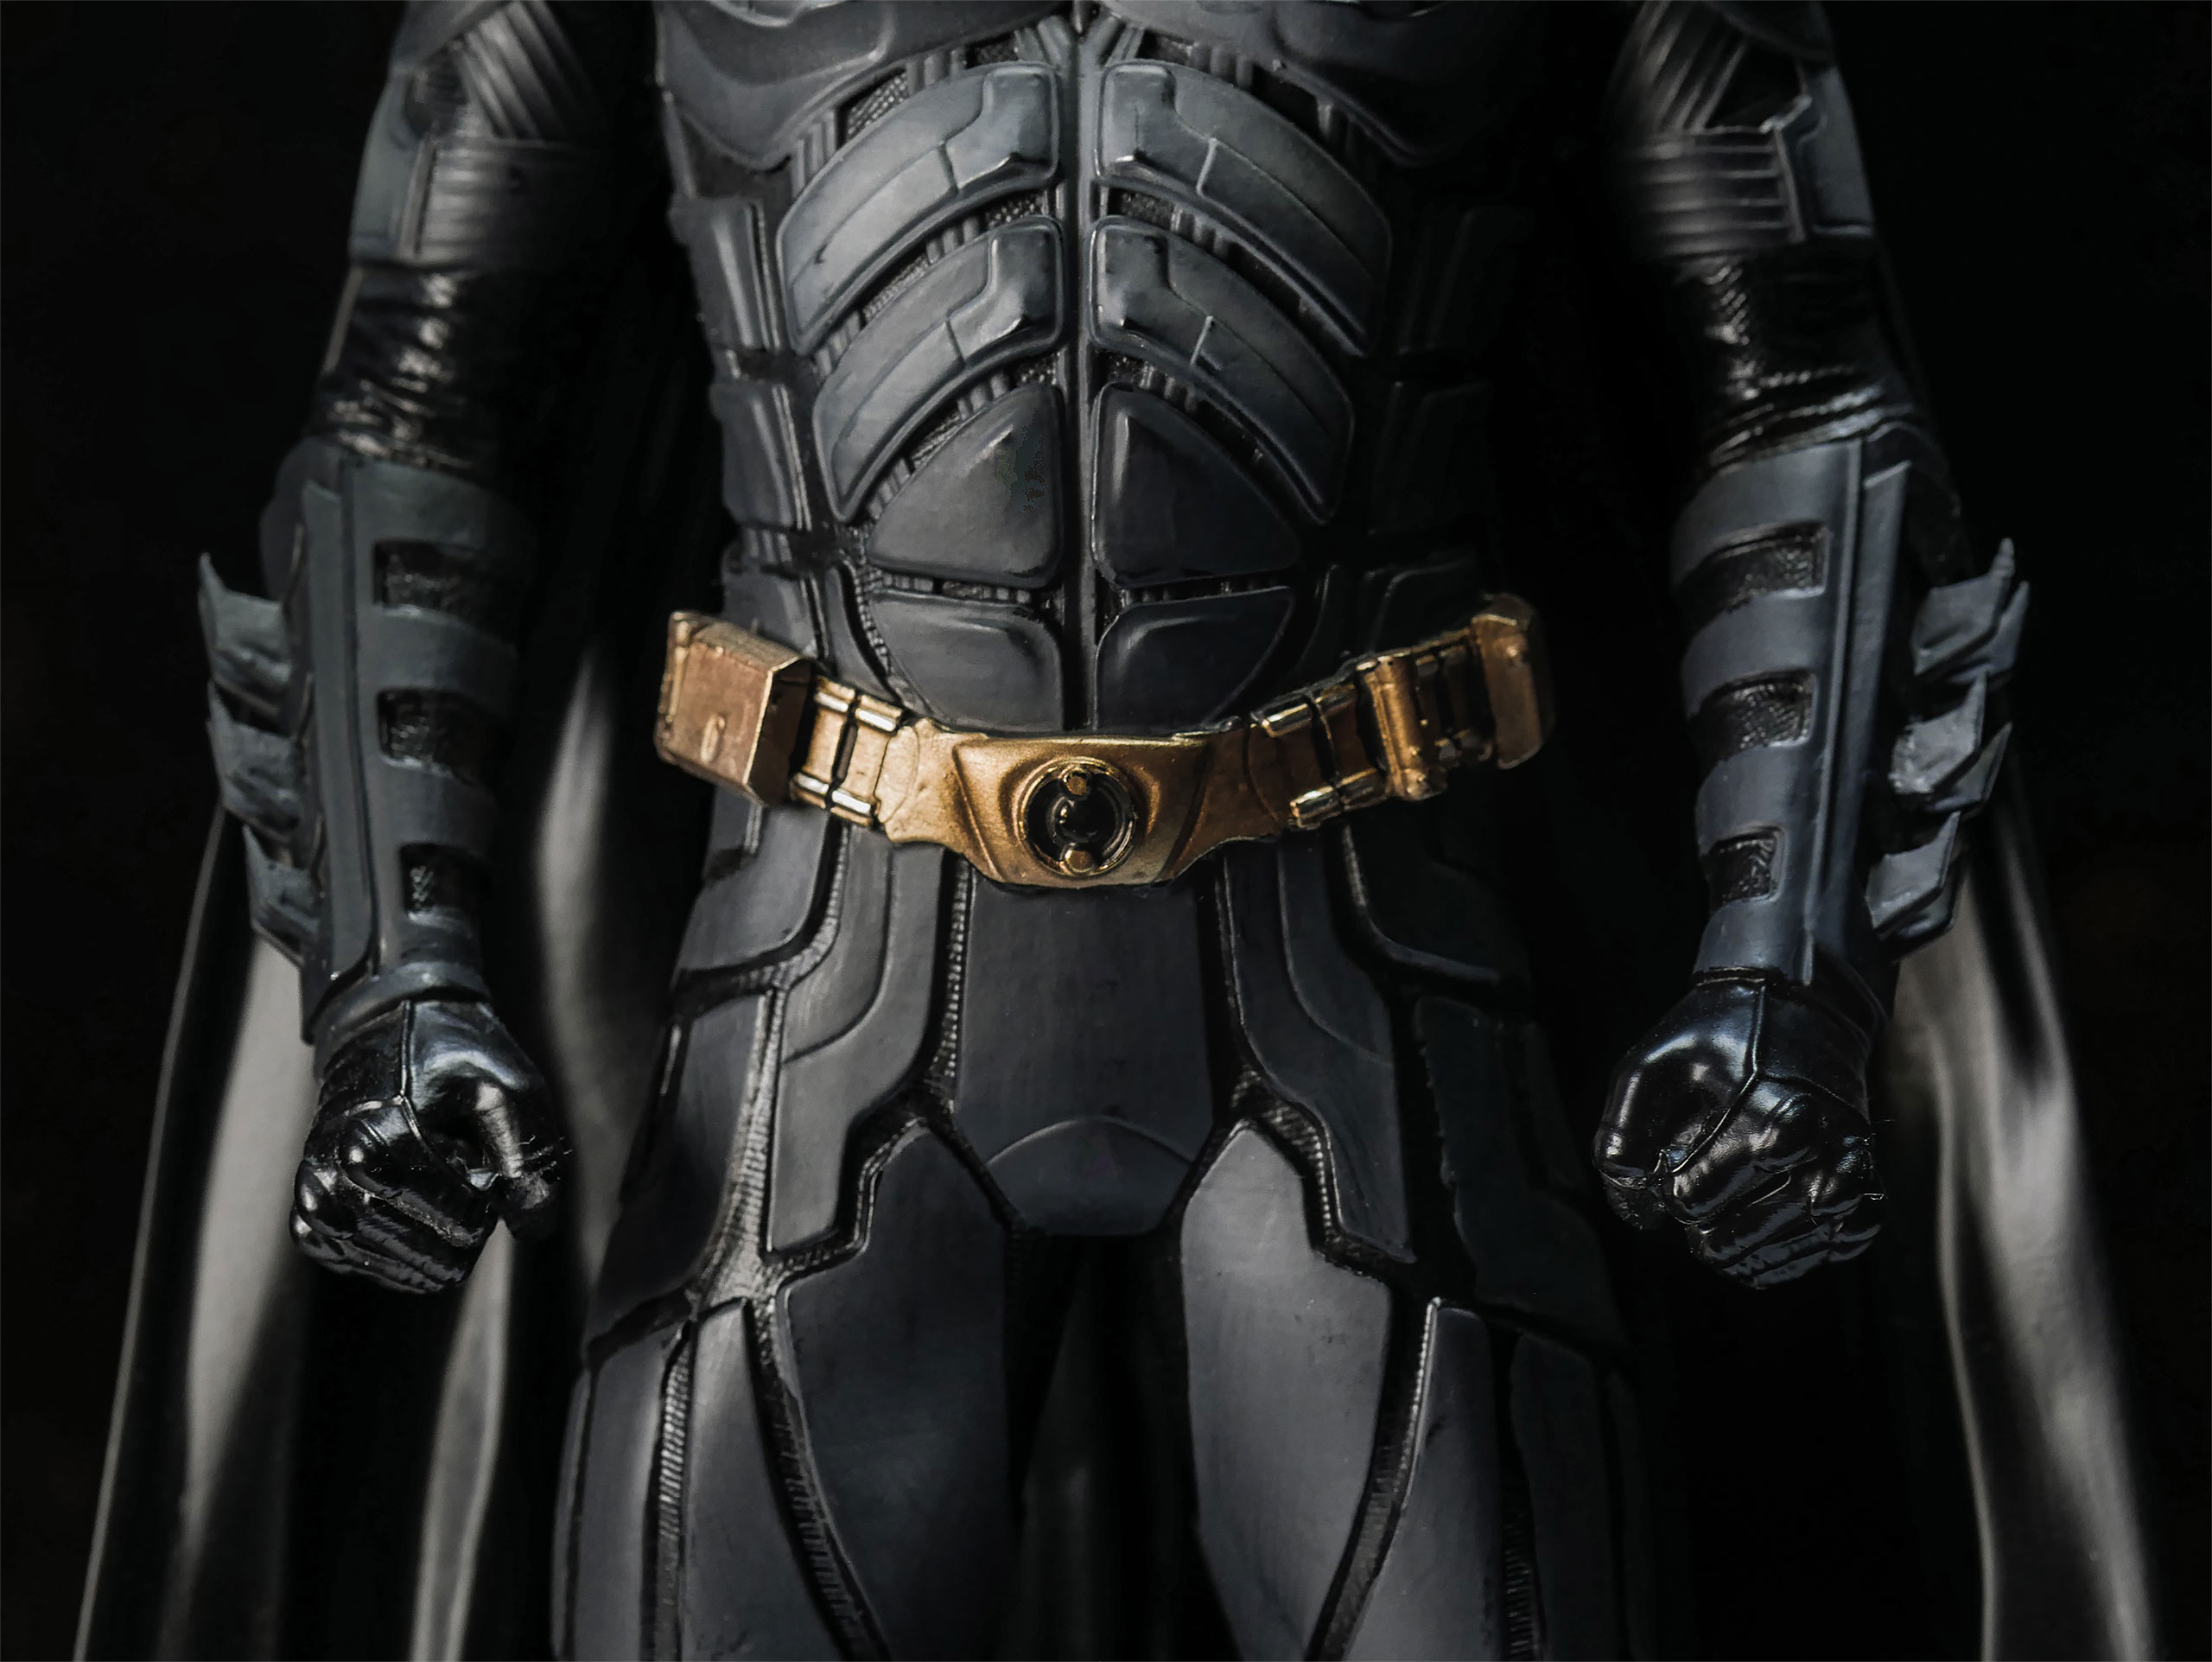 Batman - Christian Bale Mega Statue 1:6